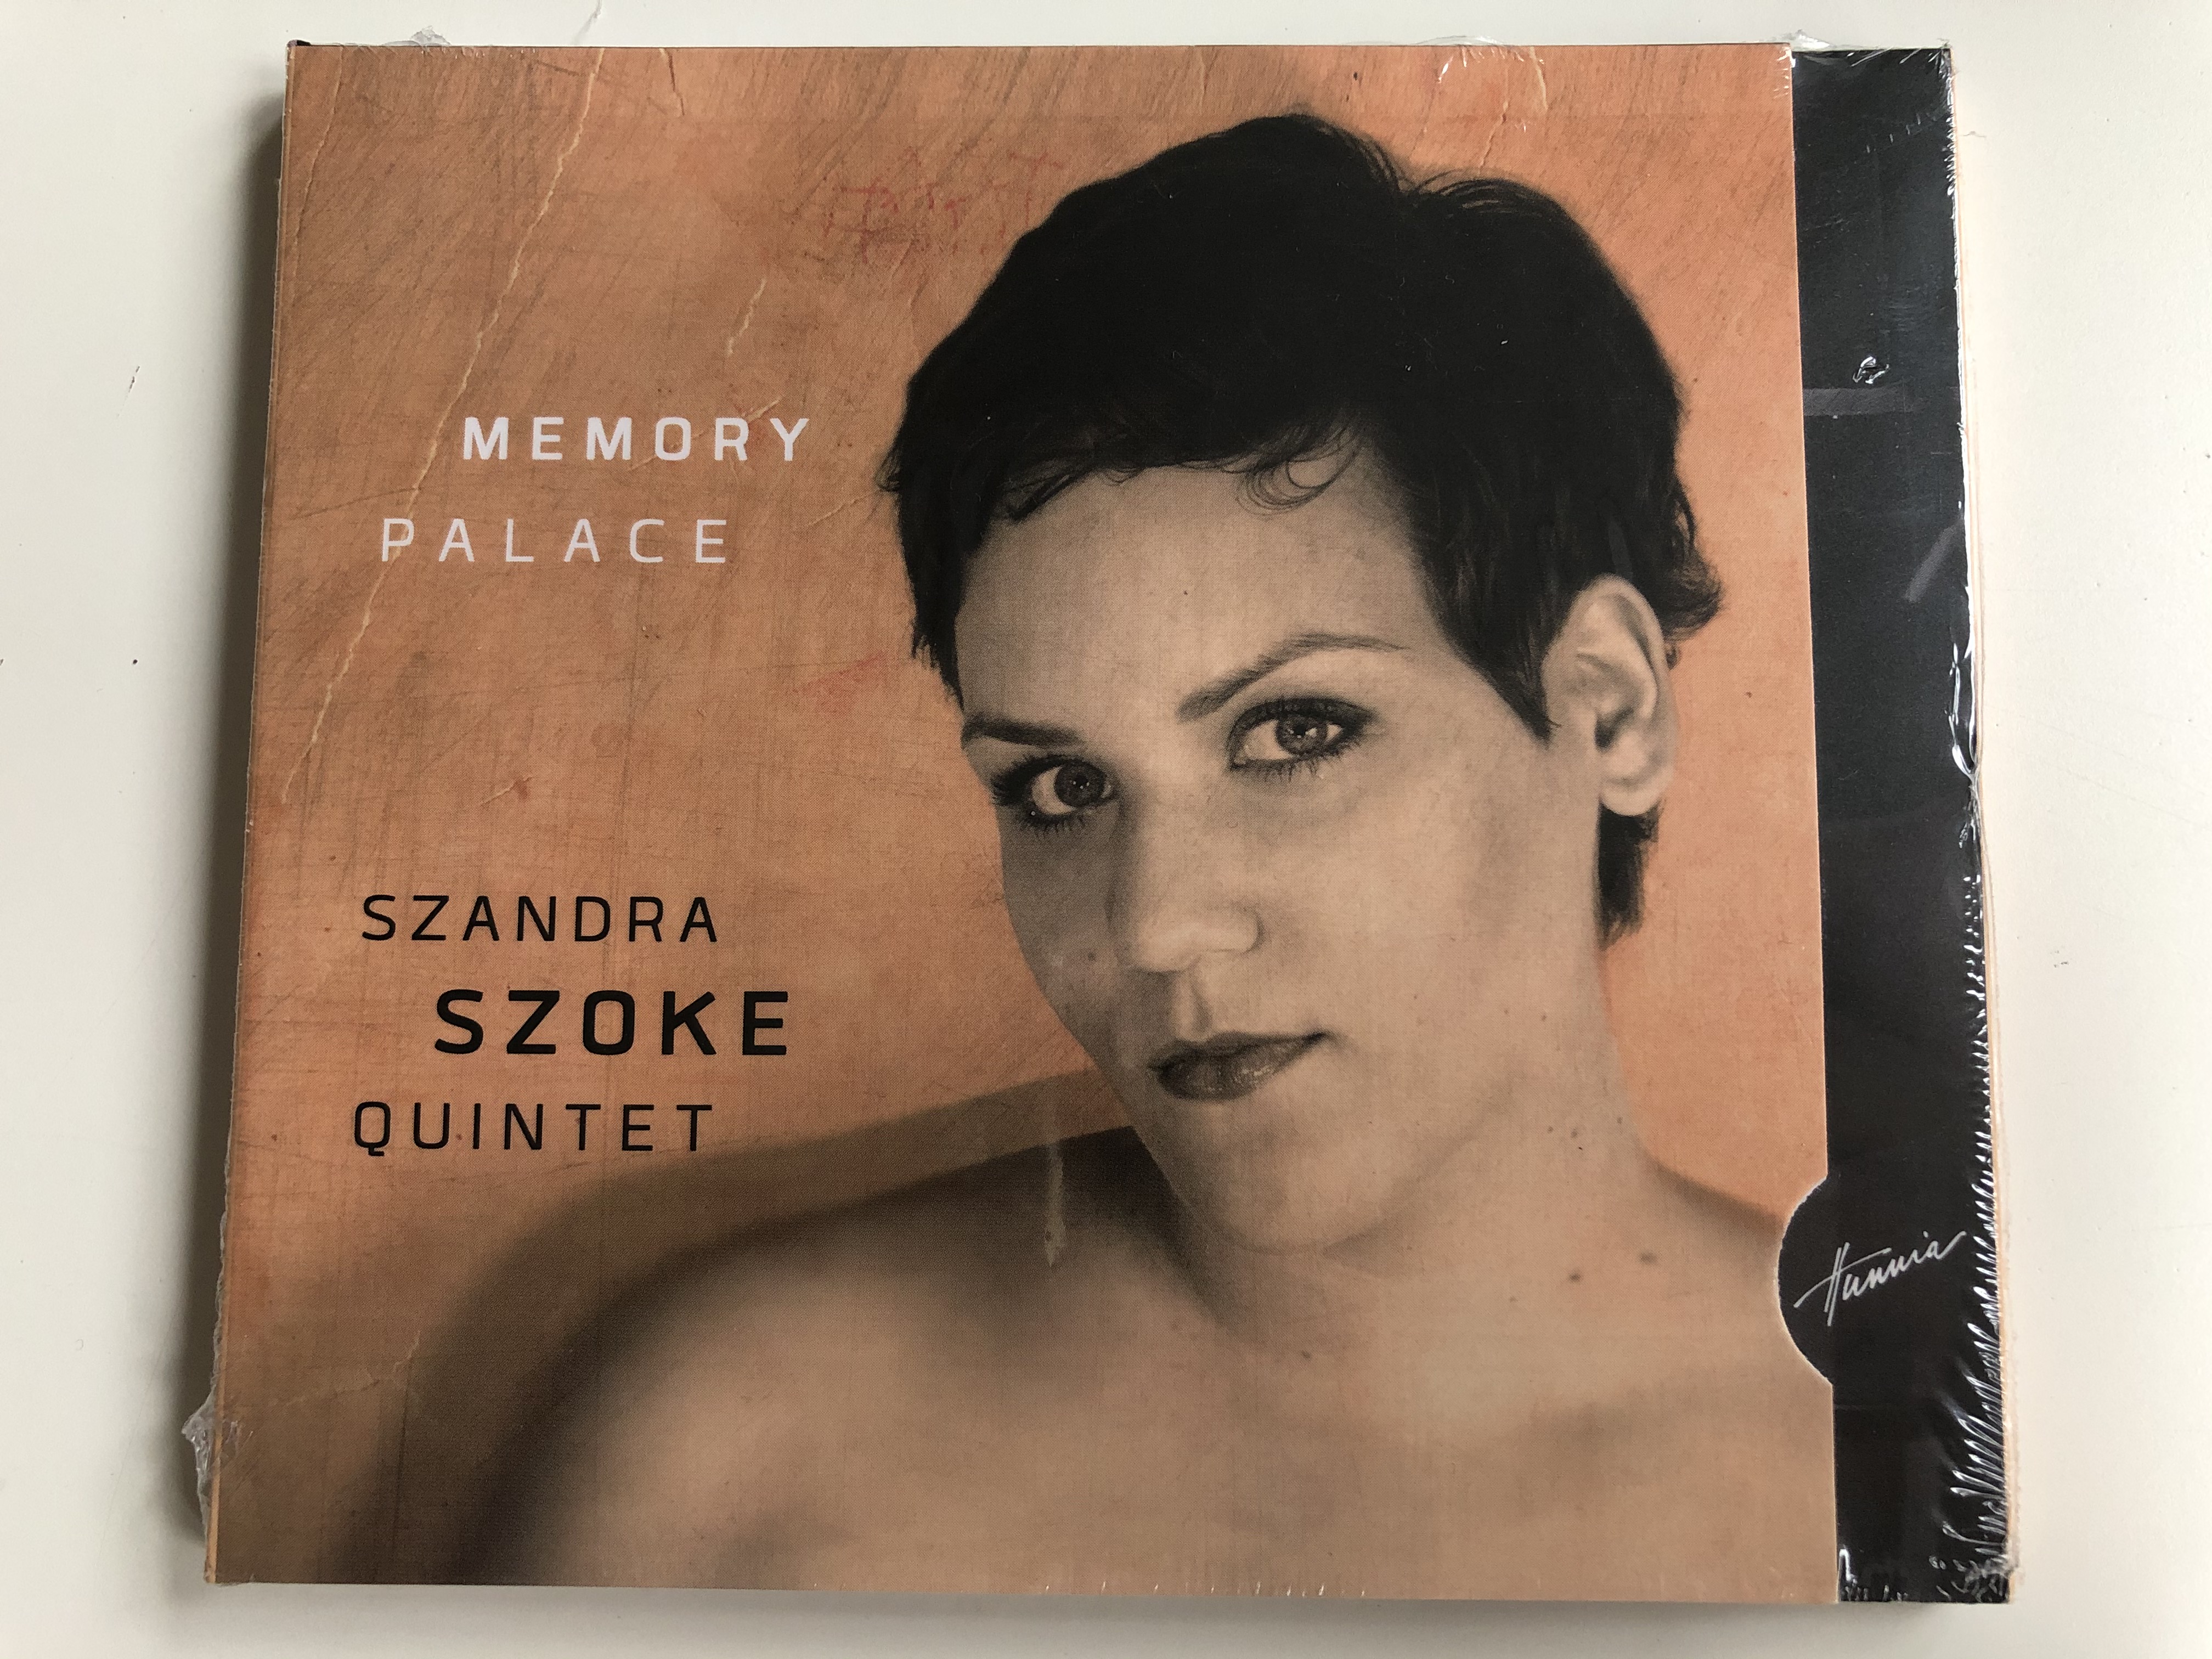 memory-palace-szandra-sz-ke-quintet-hunnia-records-film-production-audio-cd-2014-hrcd1410-1-.jpg